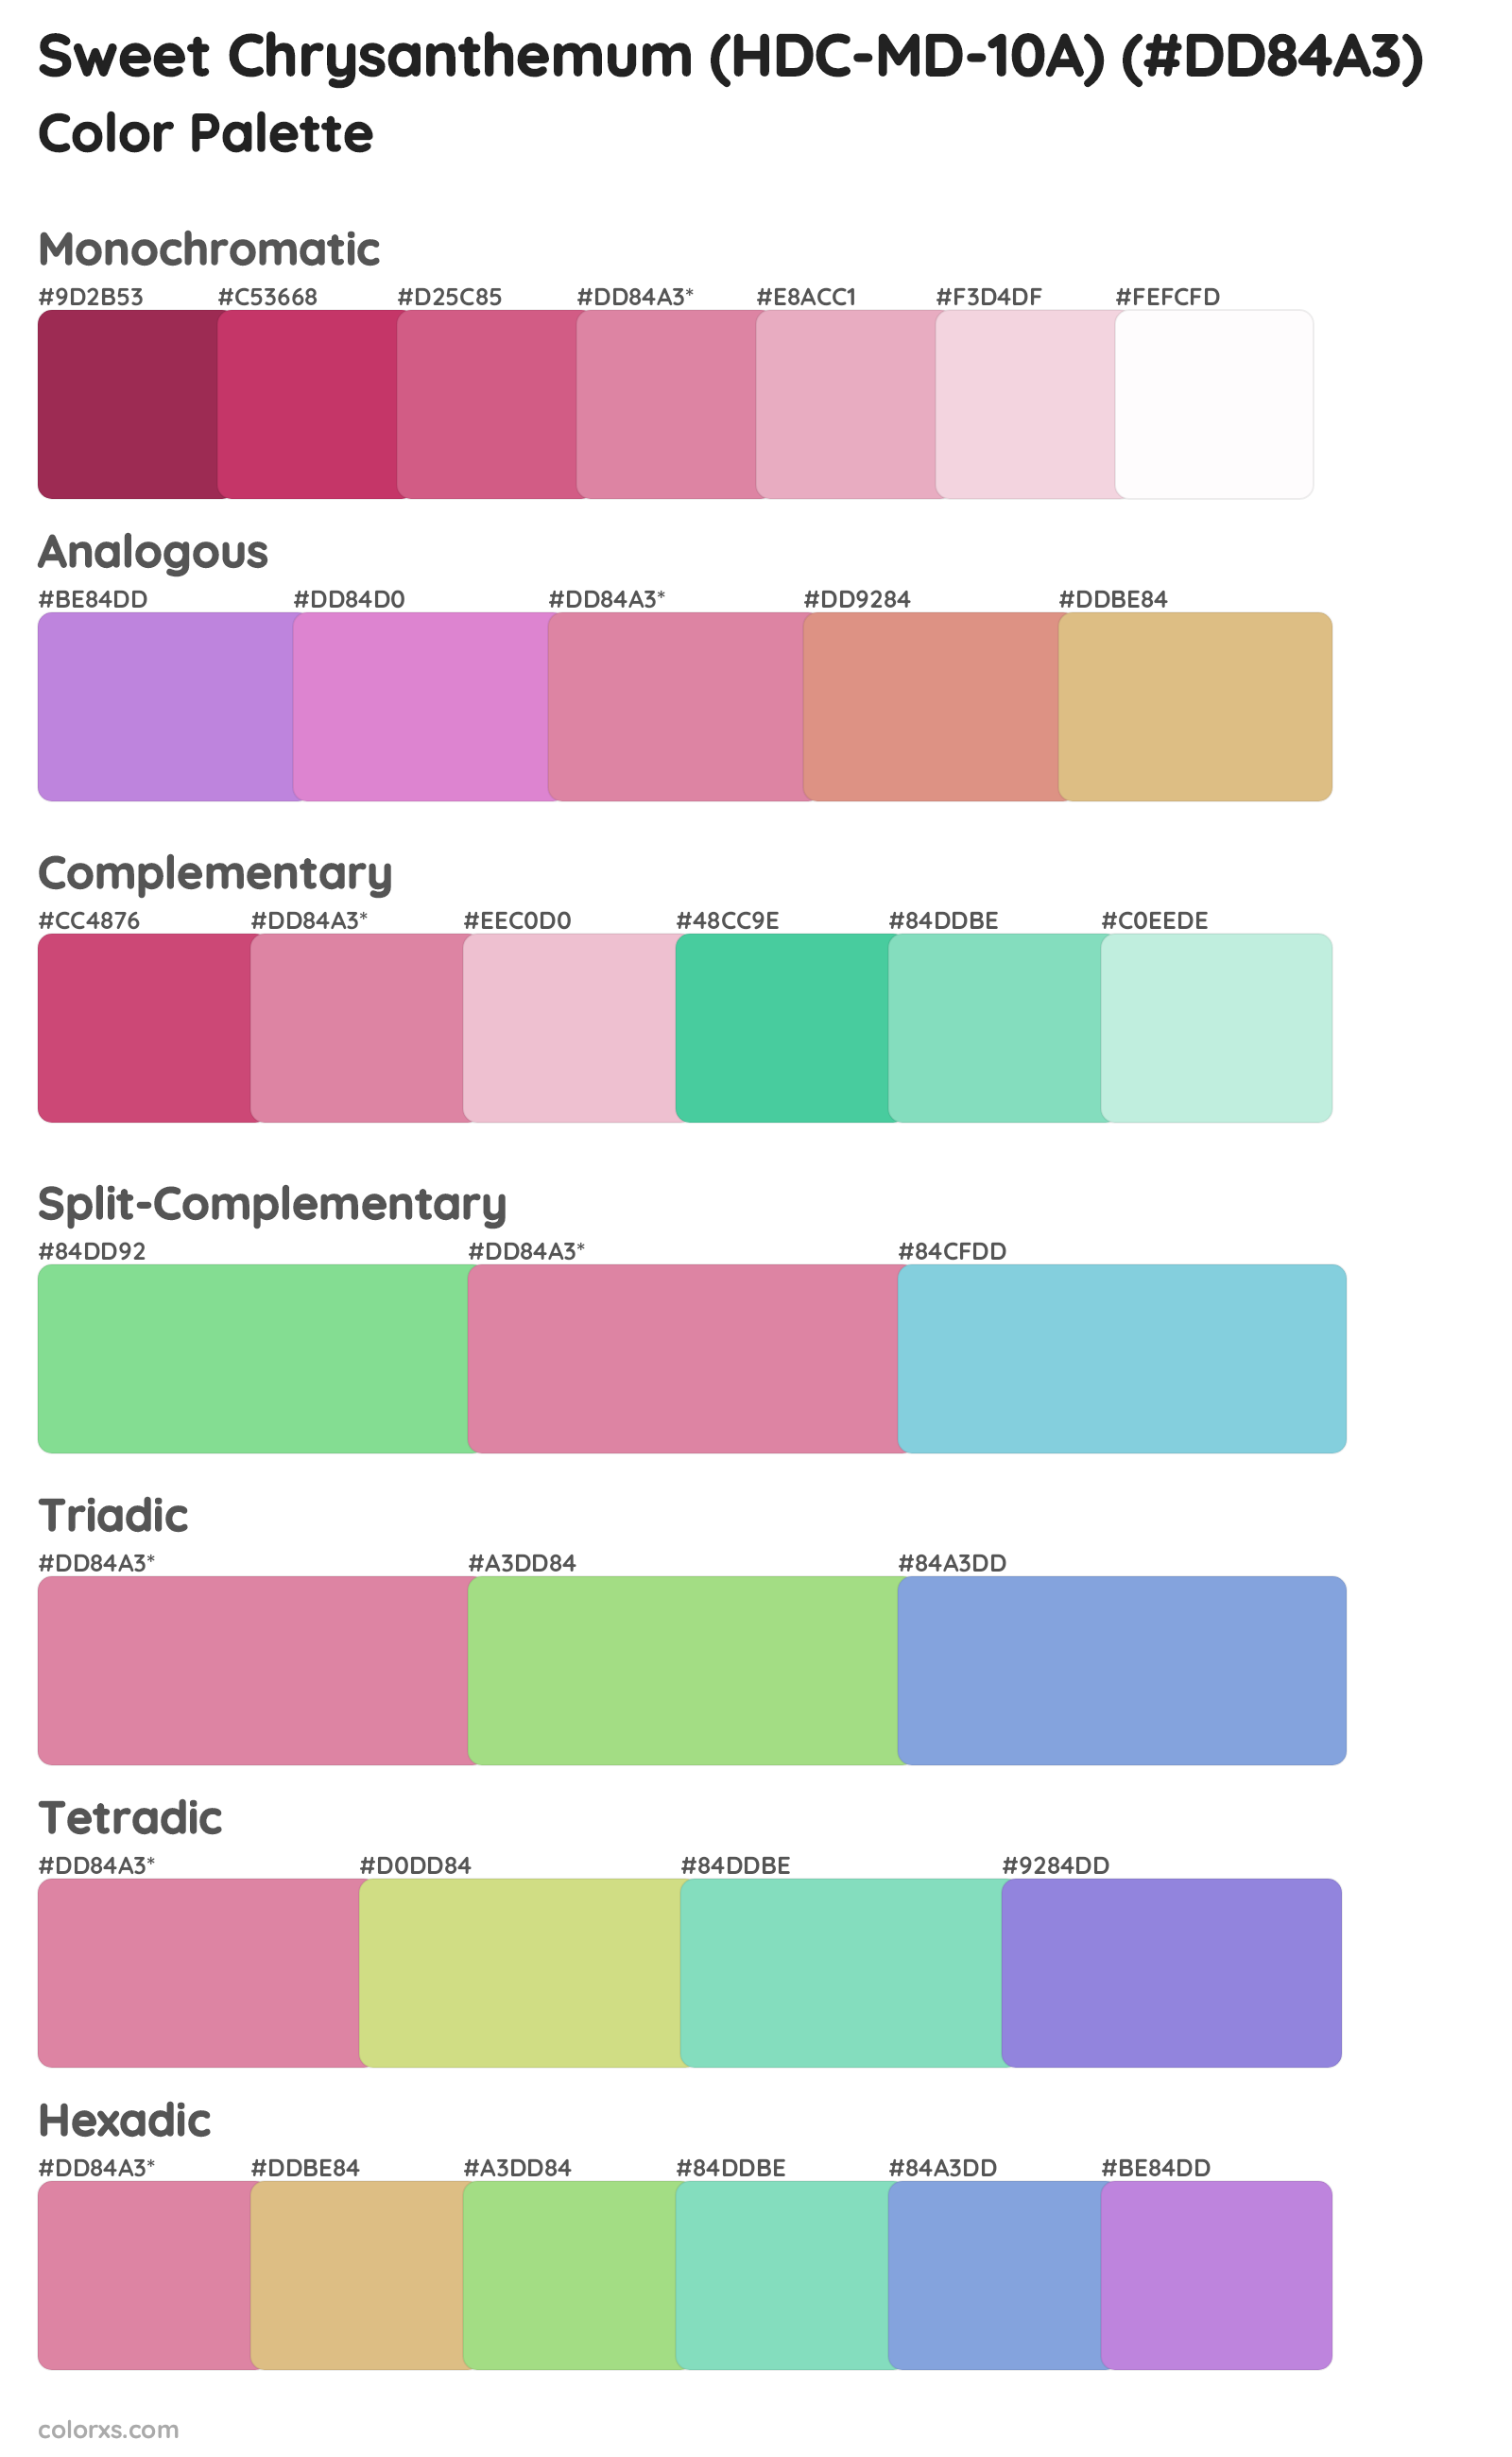 Sweet Chrysanthemum (HDC-MD-10A) Color Scheme Palettes